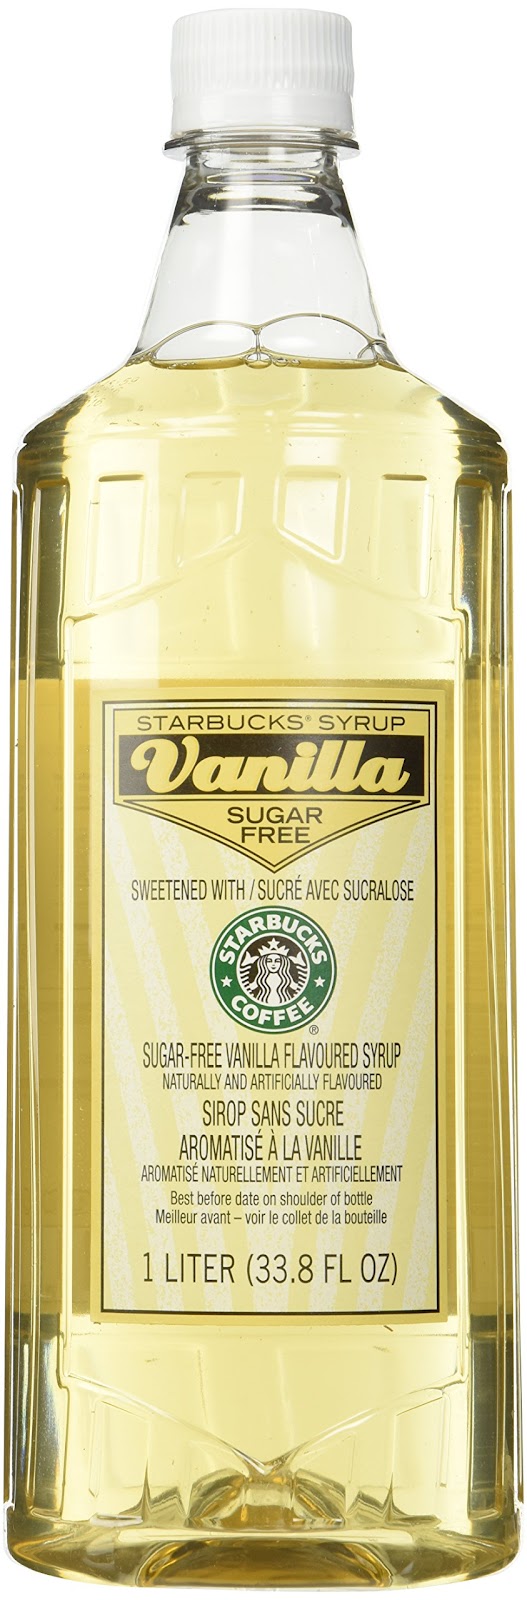 Starbucks Sugar-Free Vanilla Syrup